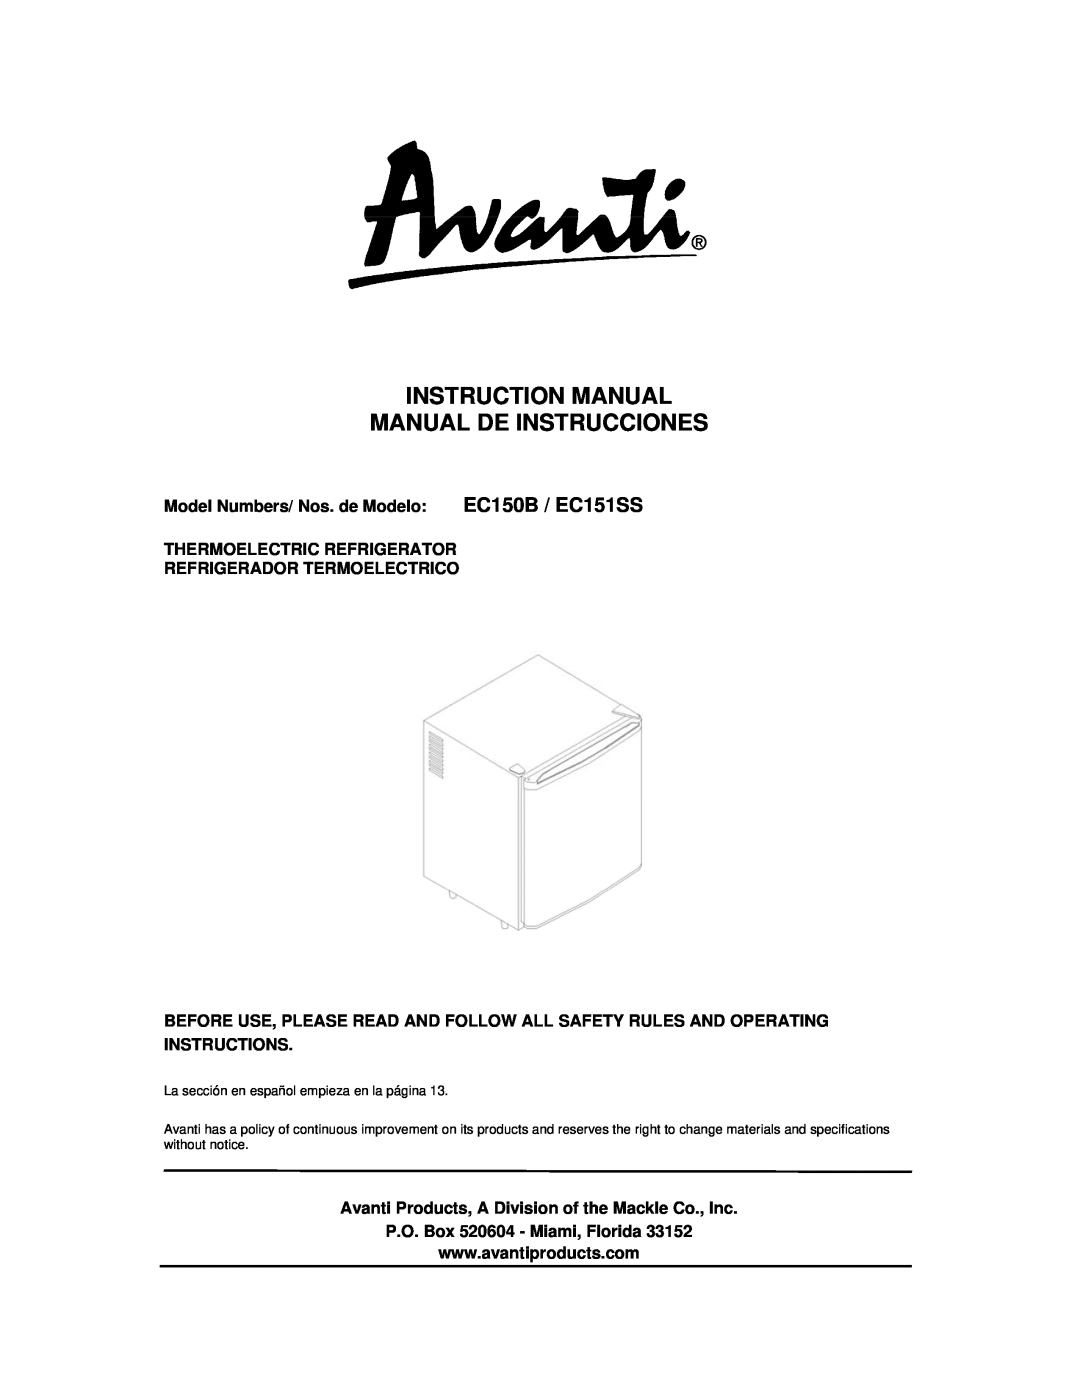 Avanti instruction manual Model Numbers/ Nos. de Modelo EC150B / EC151SS, Thermoelectric Refrigerator 